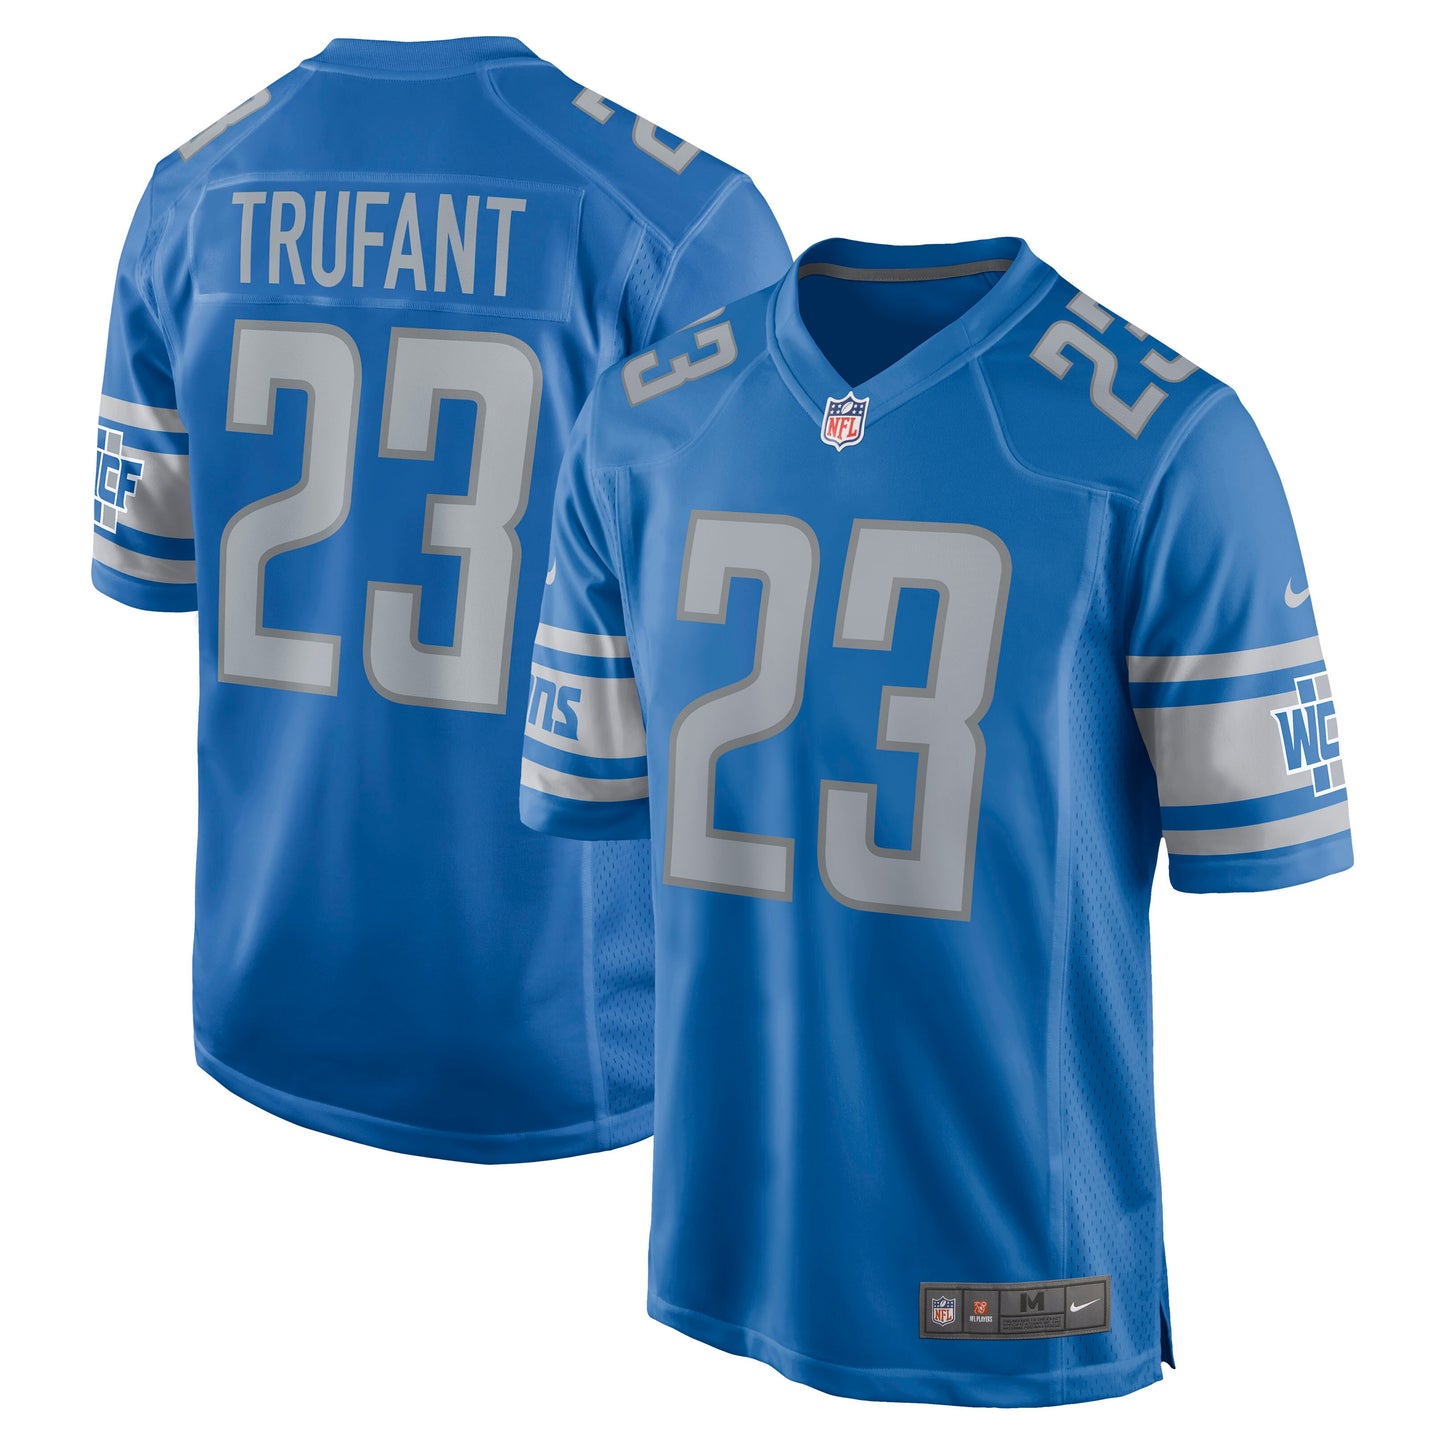 Desmond Trufant Detroit Lions Nike Game Jersey - Blue